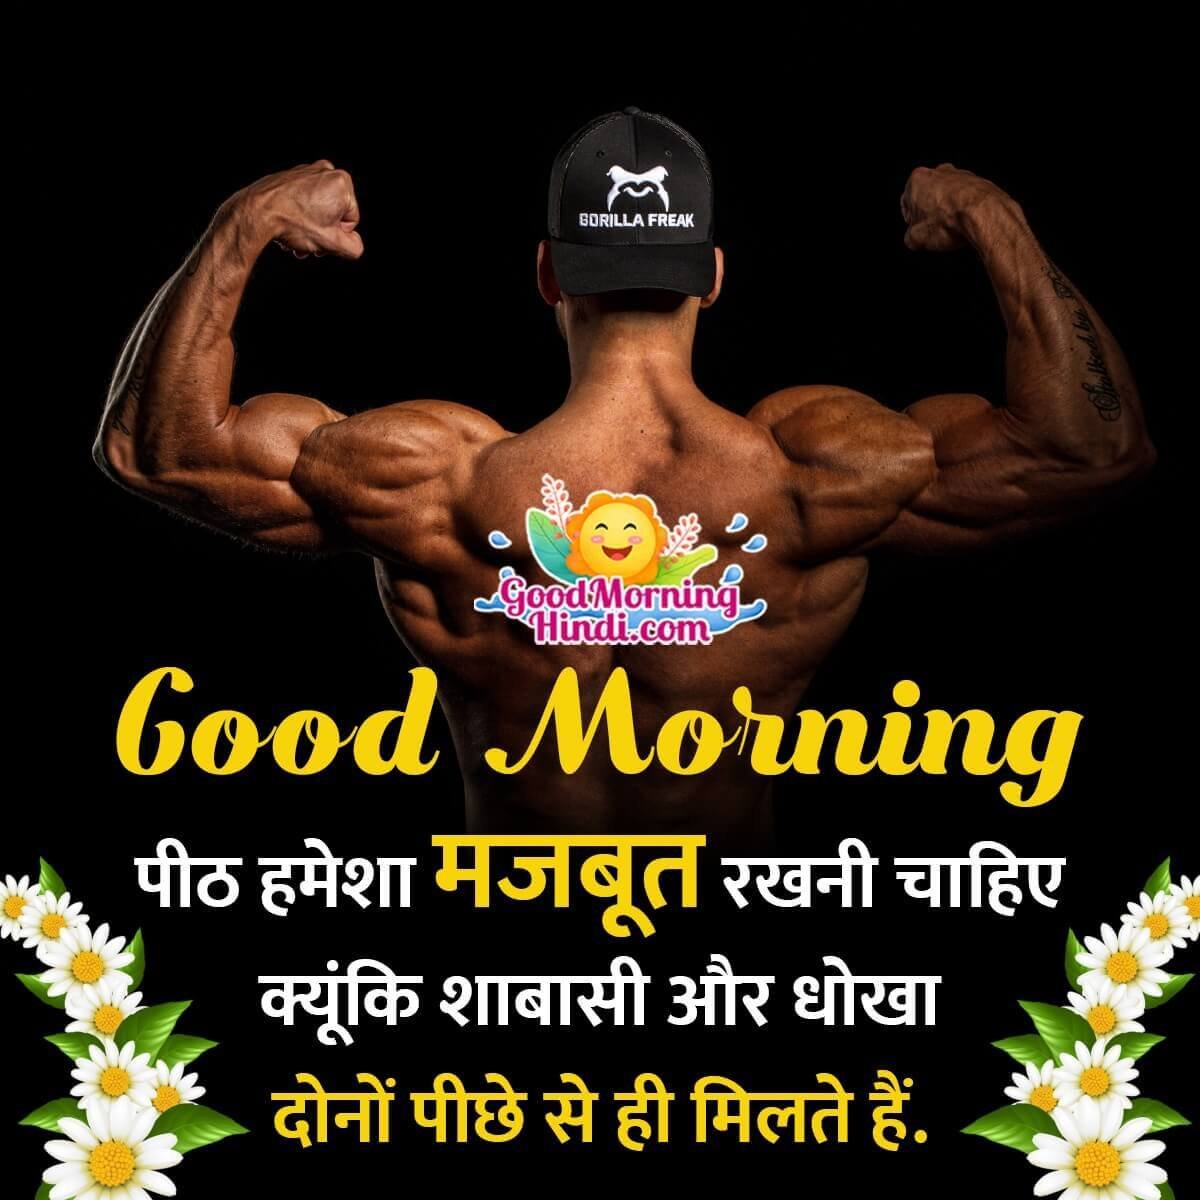 Good Morning Hindi Status Images